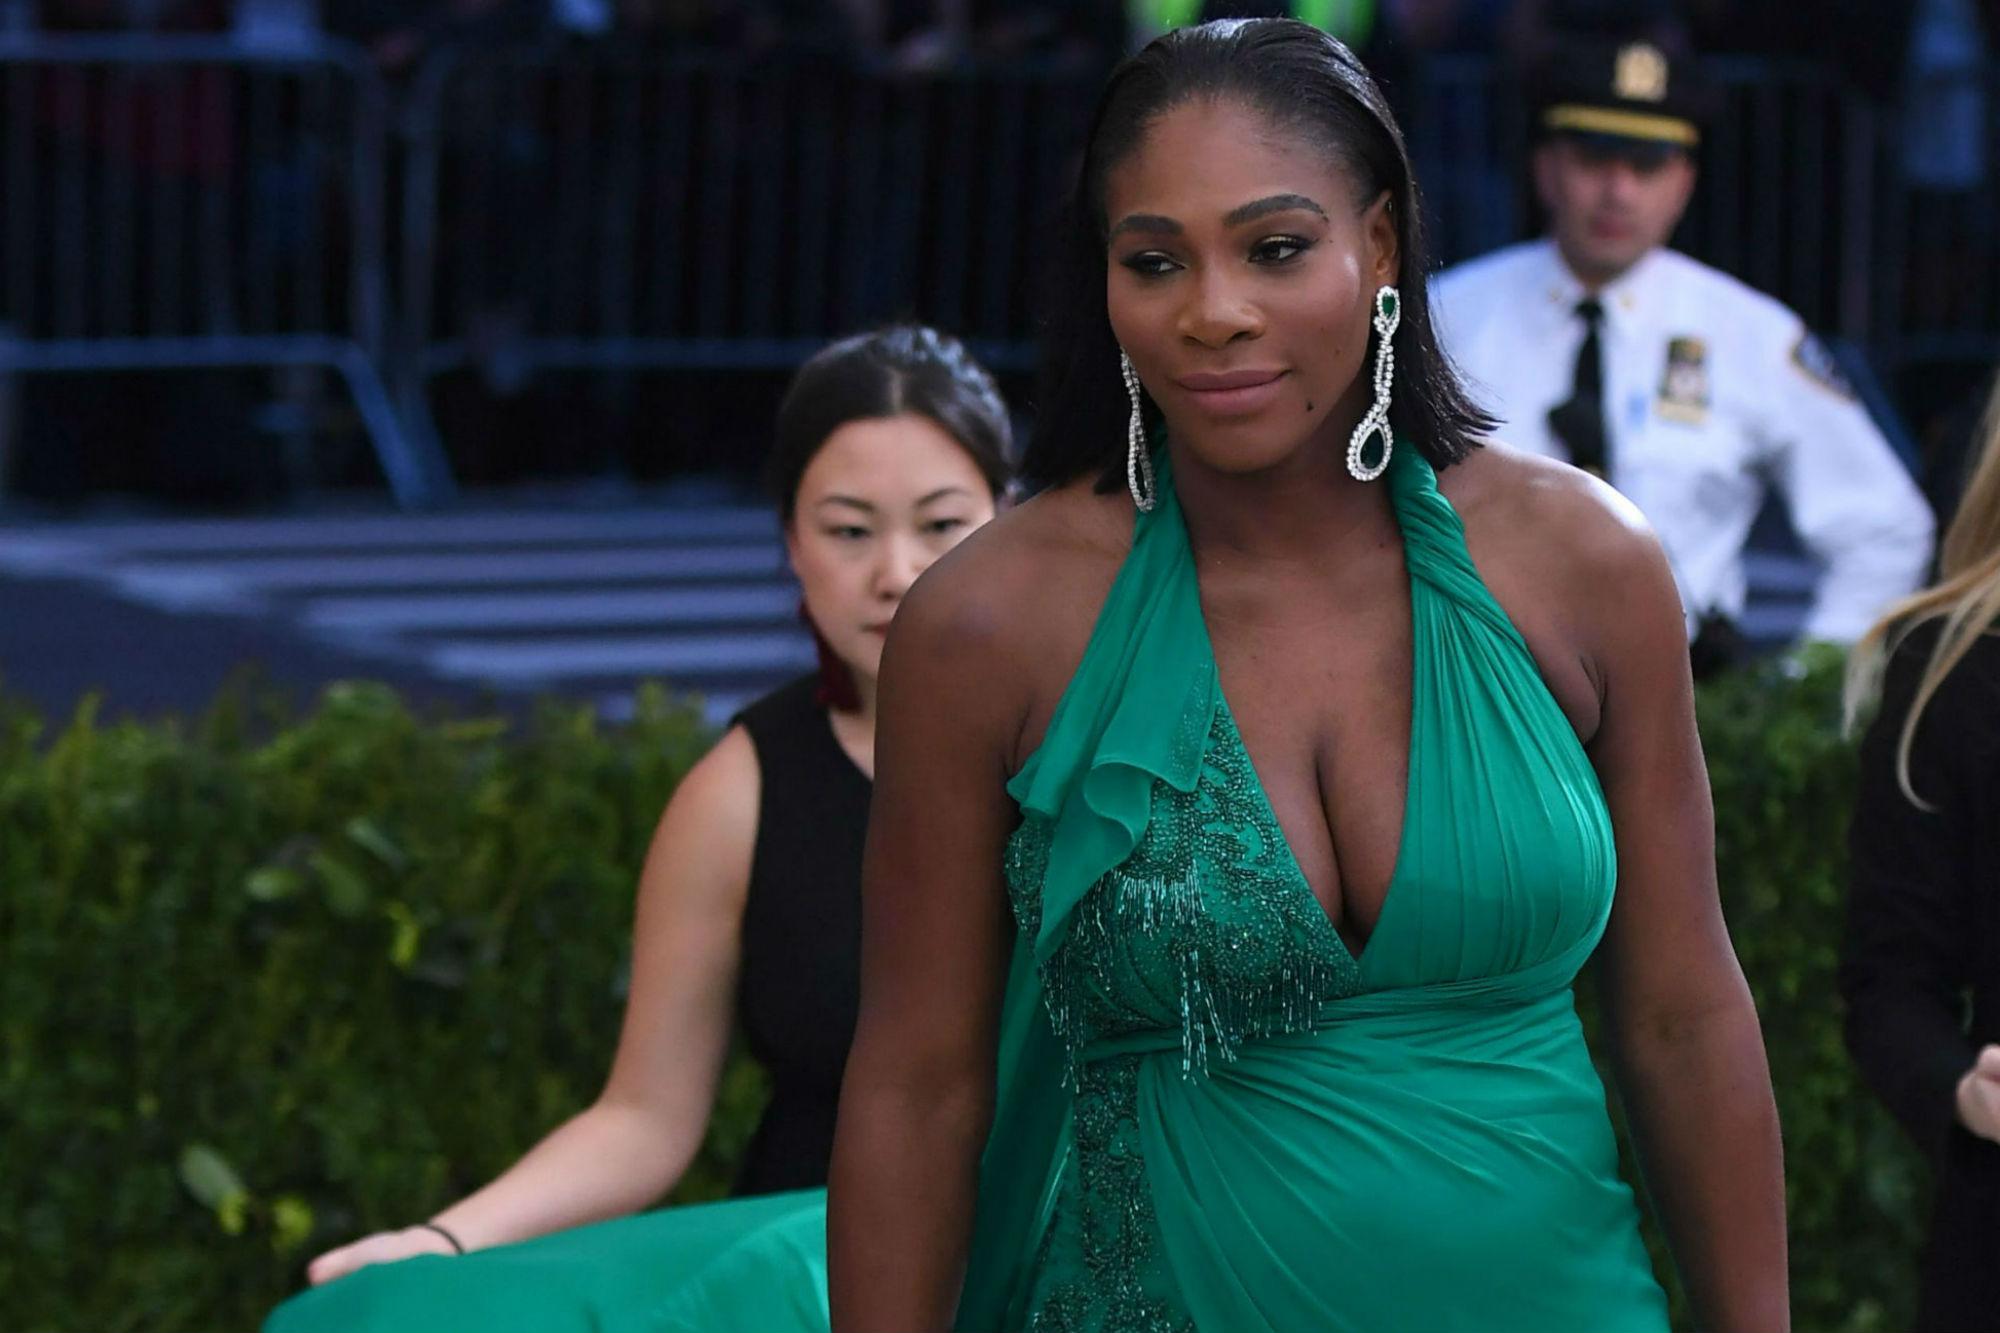 La tennista Serena Williams arriva al Met Gala in abito verde smeraldo mostrando il pancione (Foto Afp)